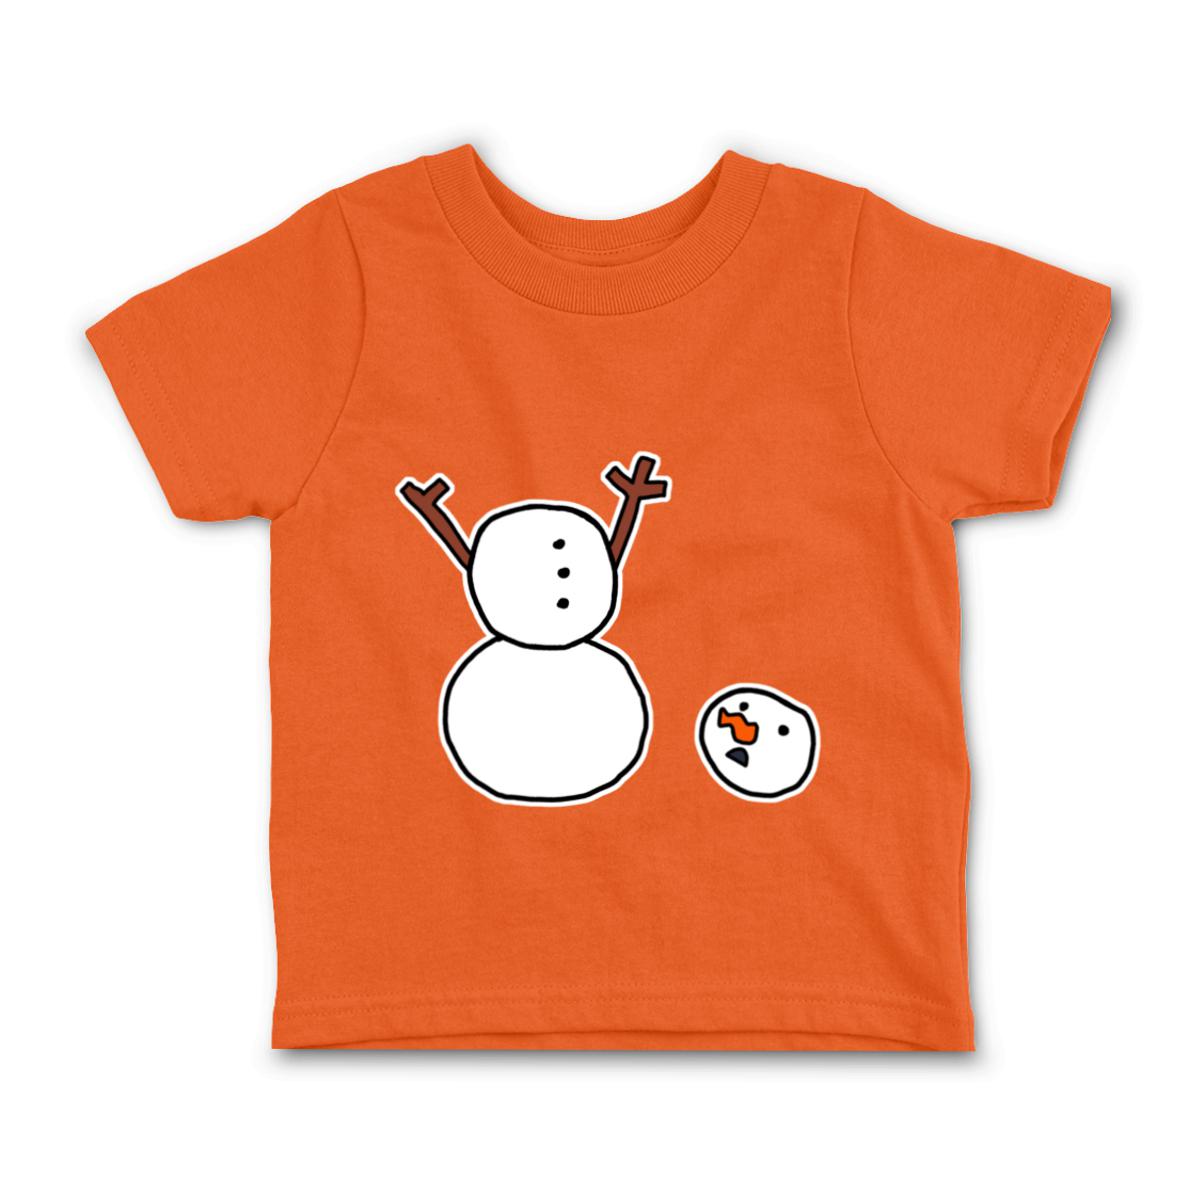 Headless Snowman Toddler Tee 56T orange